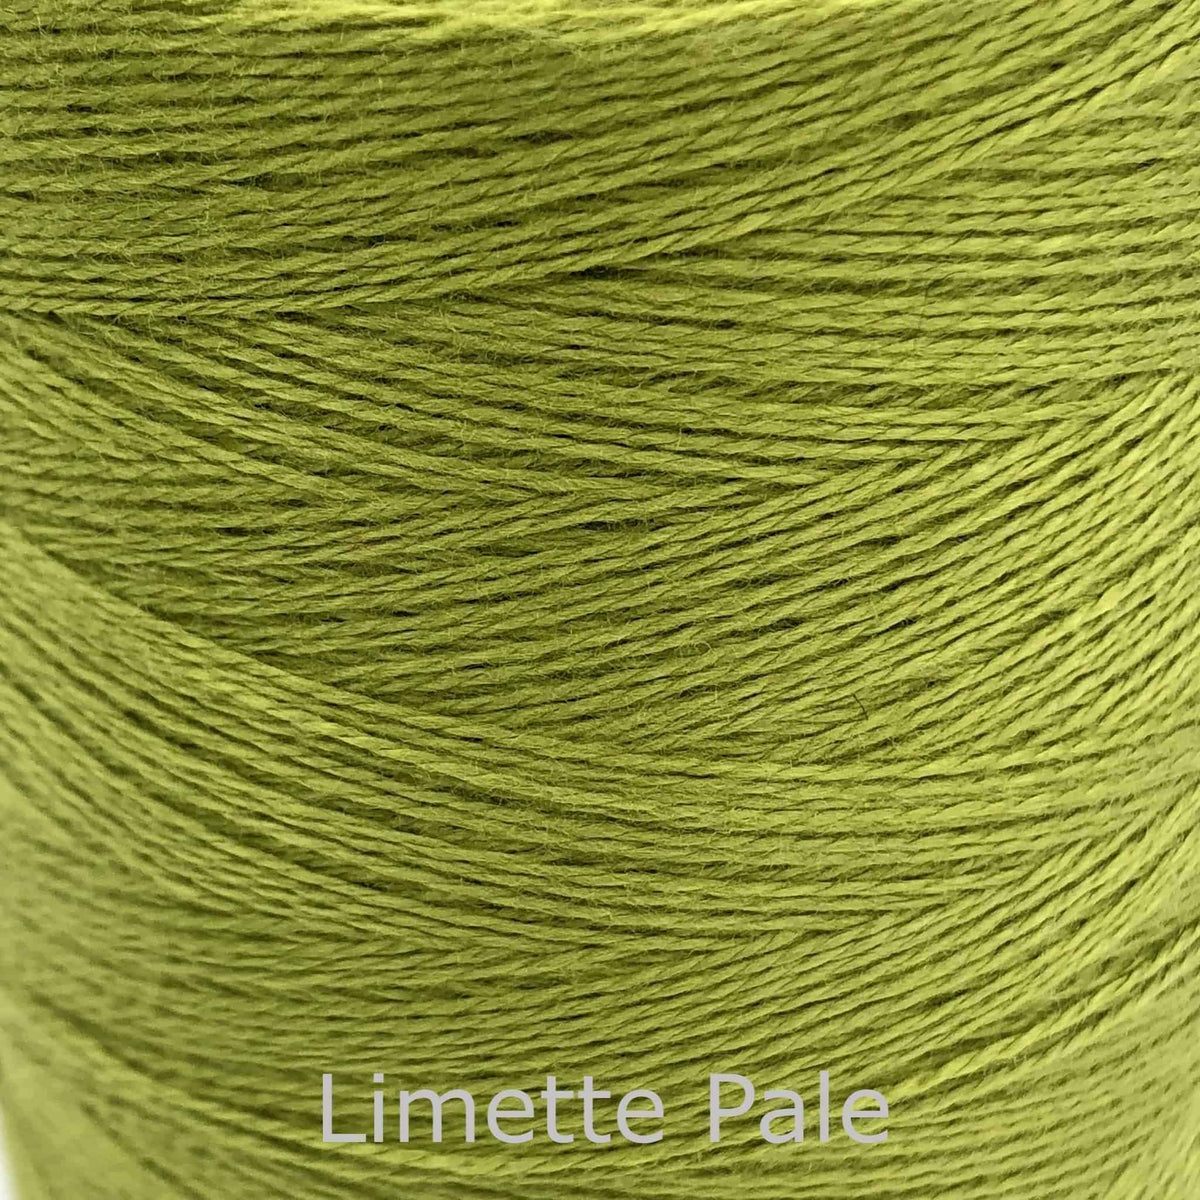 Maurice Brassard Bamboo/Cotton Ne 8/2 LIMETTE PALE - Thread Collective Australia